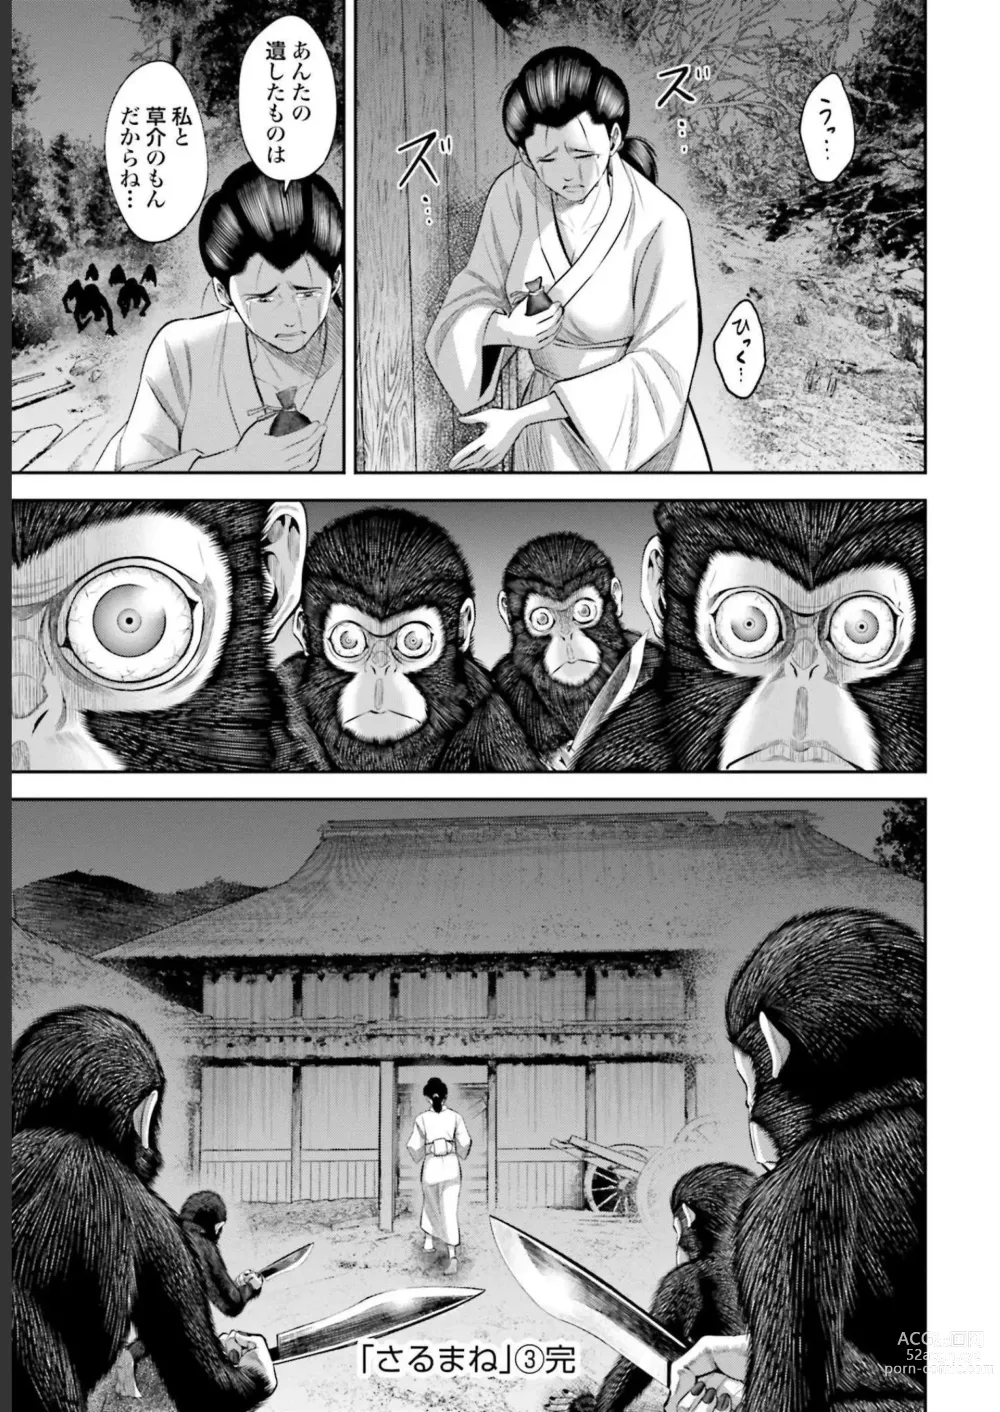 Page 159 of manga Sarumane Vol. 3